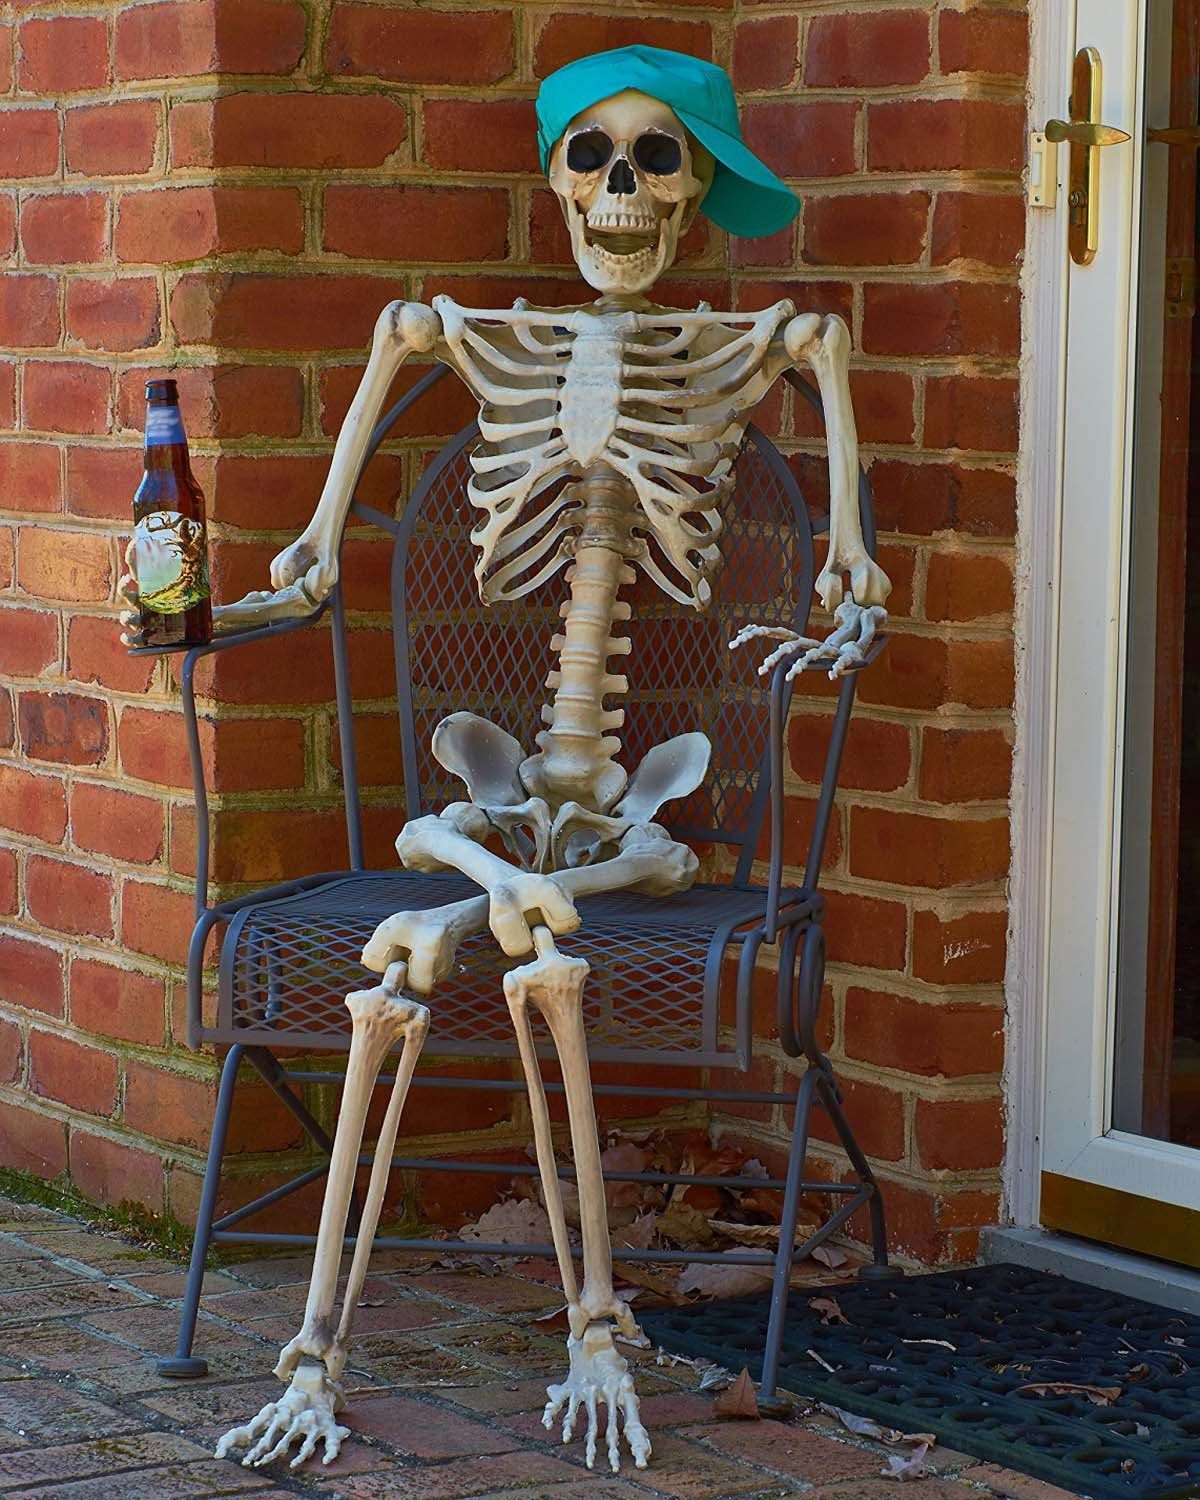 https://i.otto.de/i/otto/b3c43aad-555e-537d-8053-a088cf0a6f74/goods-gadgets-haengedekoration-skelett-160-cm-halloween-deko-ganzkoerper-skeleton.jpg?$formatz$